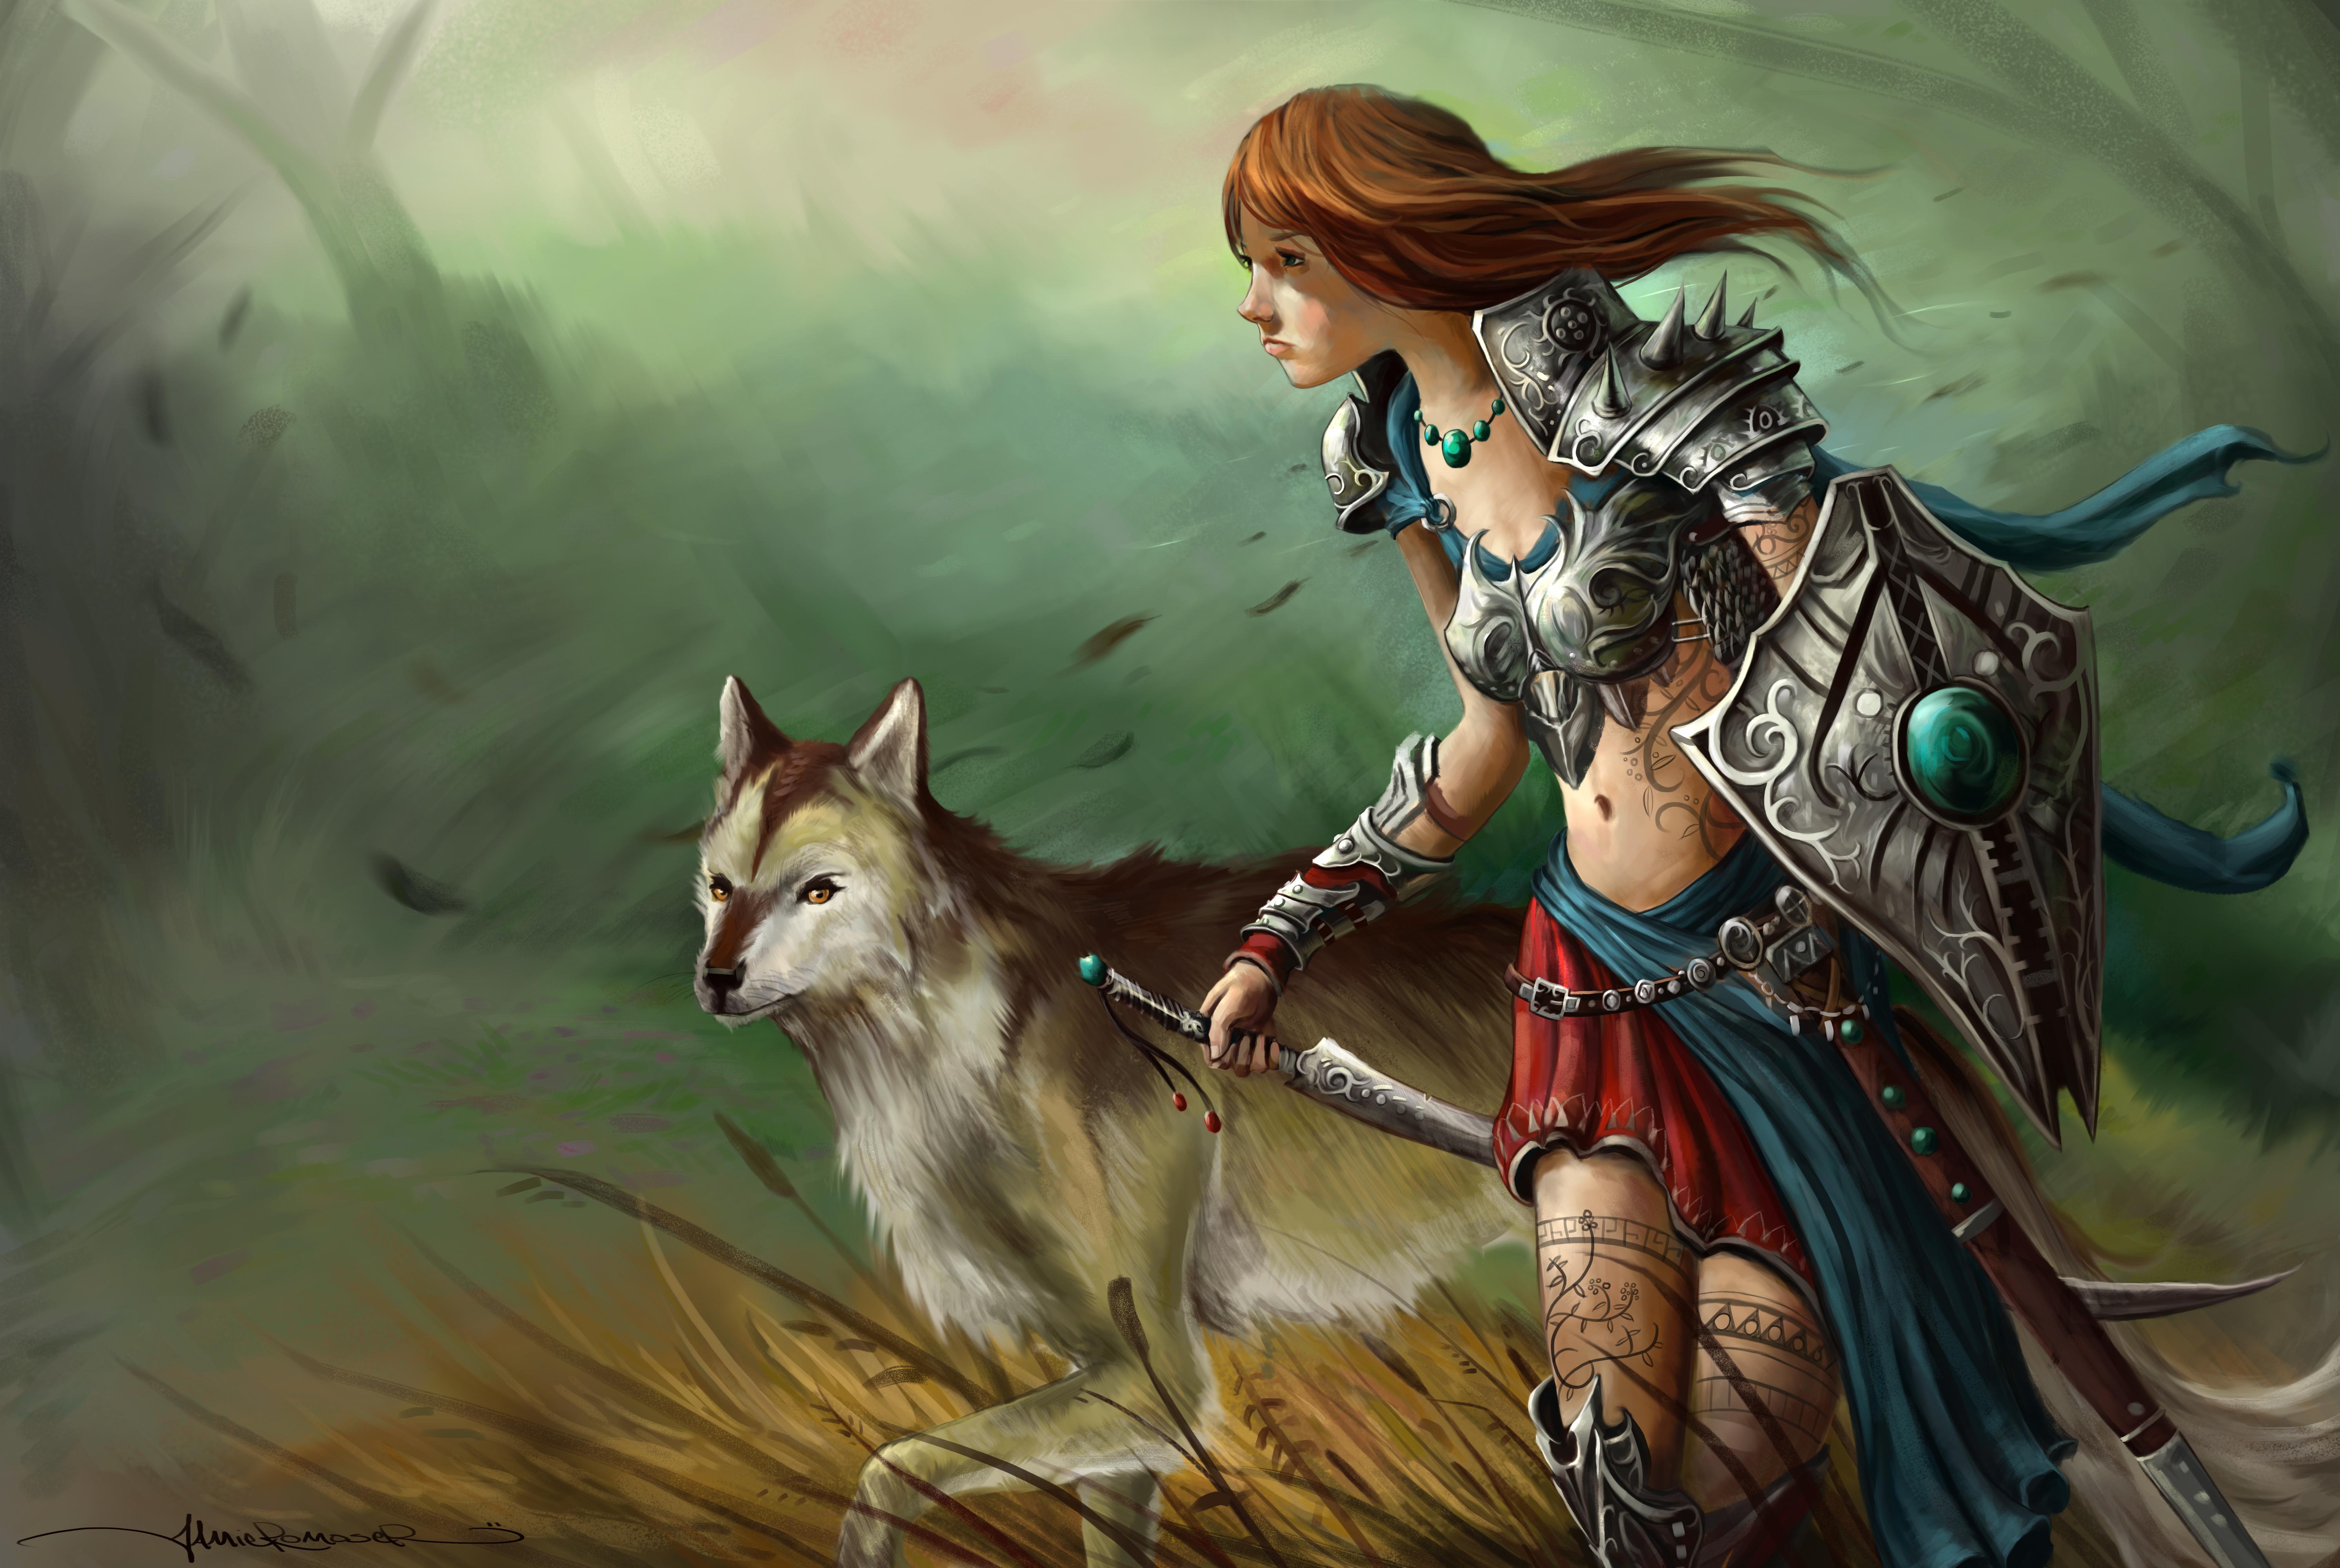 Download Wallpaper Warrior, Illustration, Fantasy, Female, Warrior